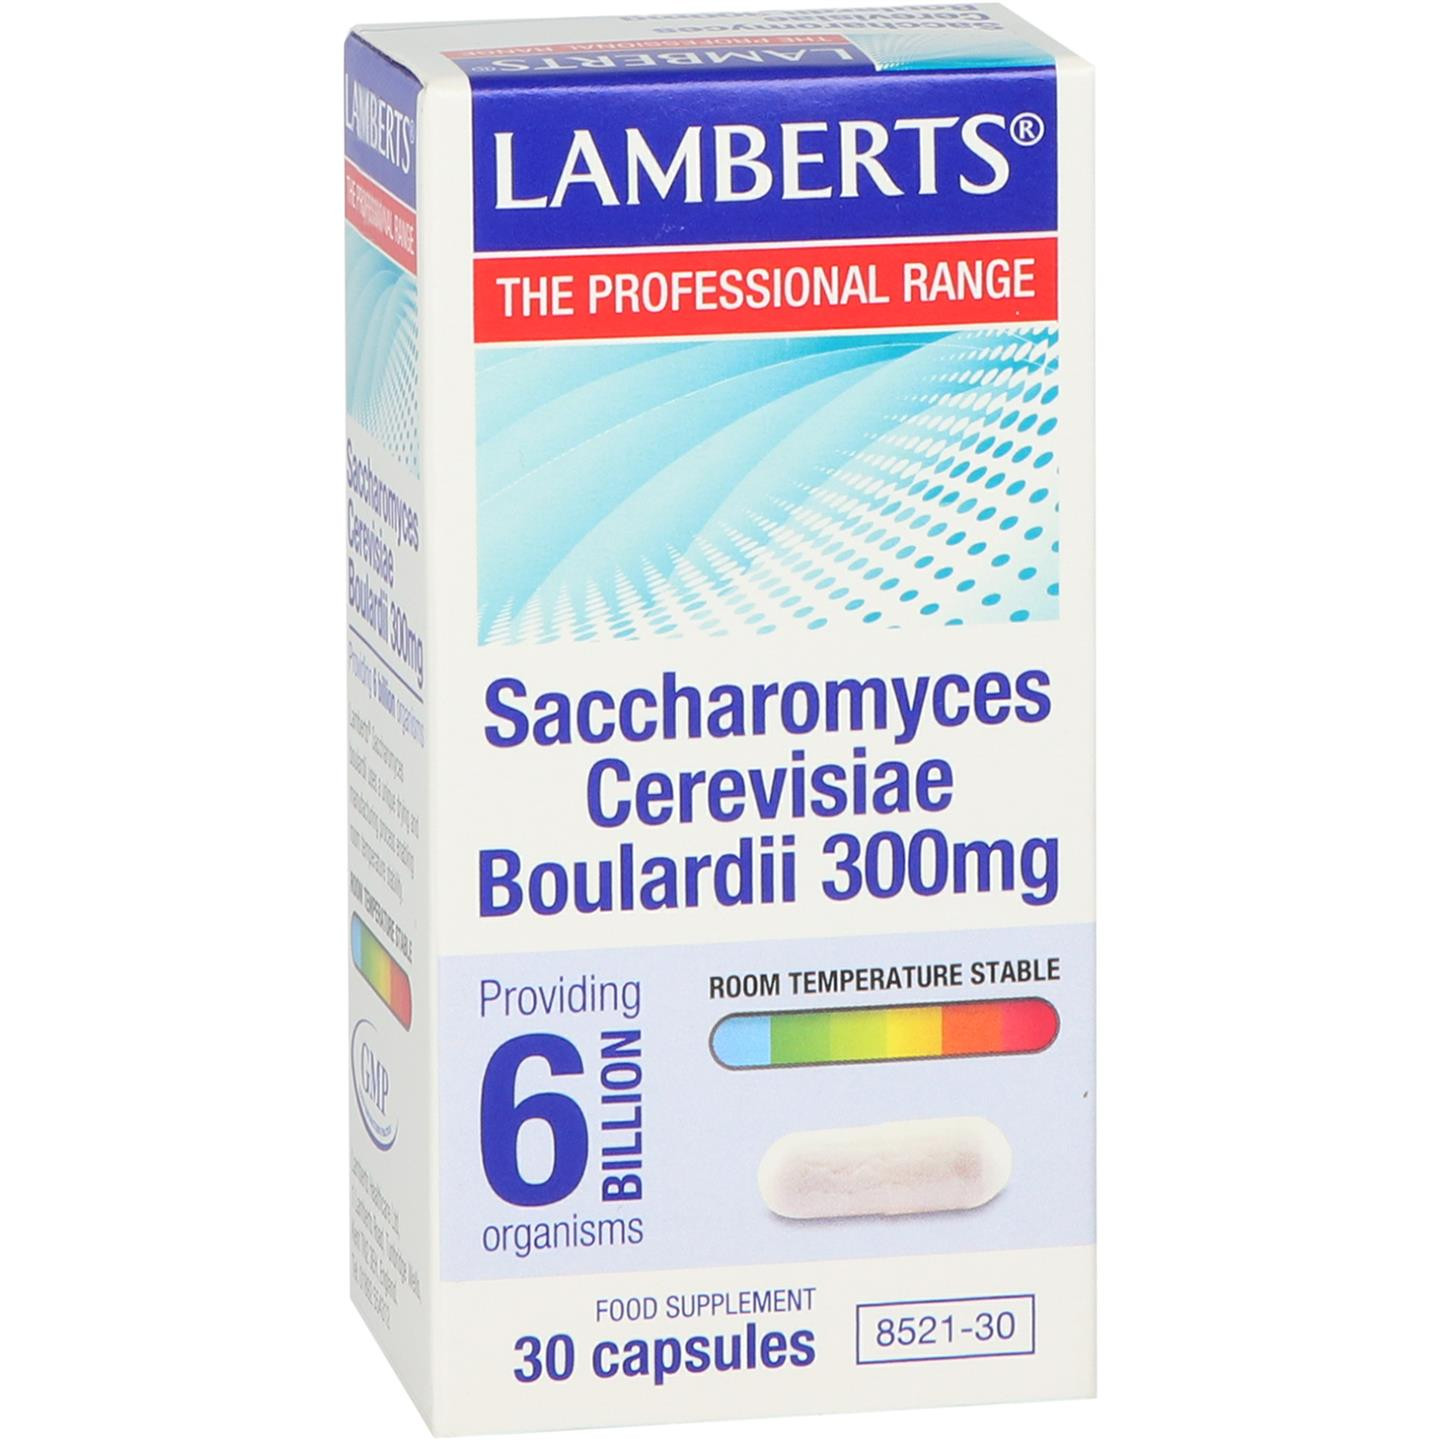 Saccharomyces Cerevisiae Boulardii 300 mg